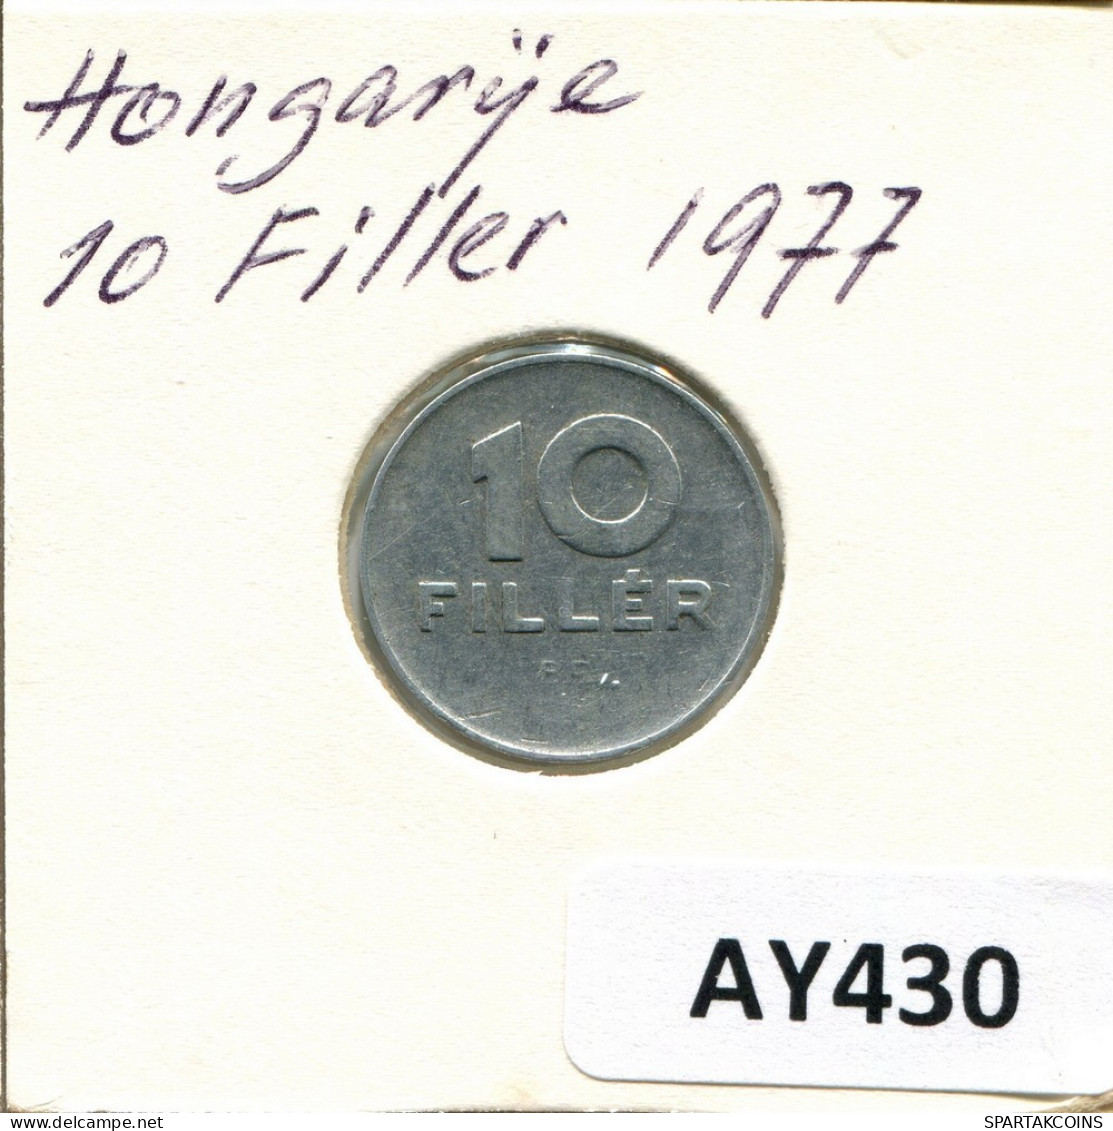 10 FILLER 1977 HONGRIE HUNGARY Pièce #AY430.F.A - Hongarije